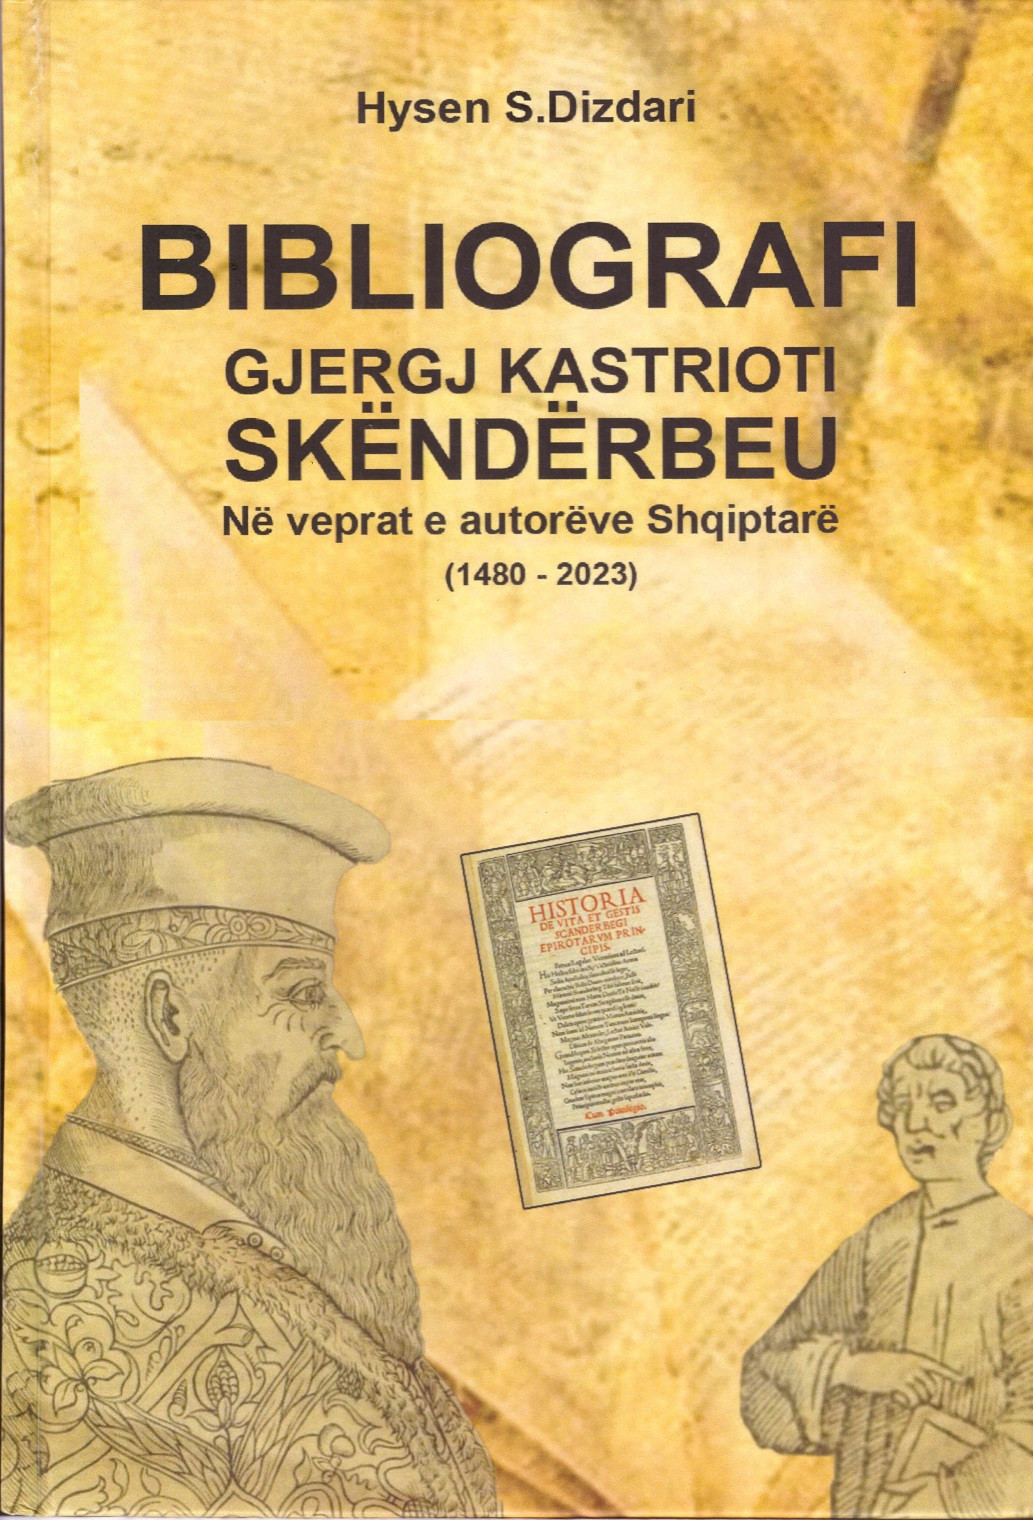 Bibliografi Gjergj Kastrioti Skenderbeu ne veprat e autoreve shqiptare